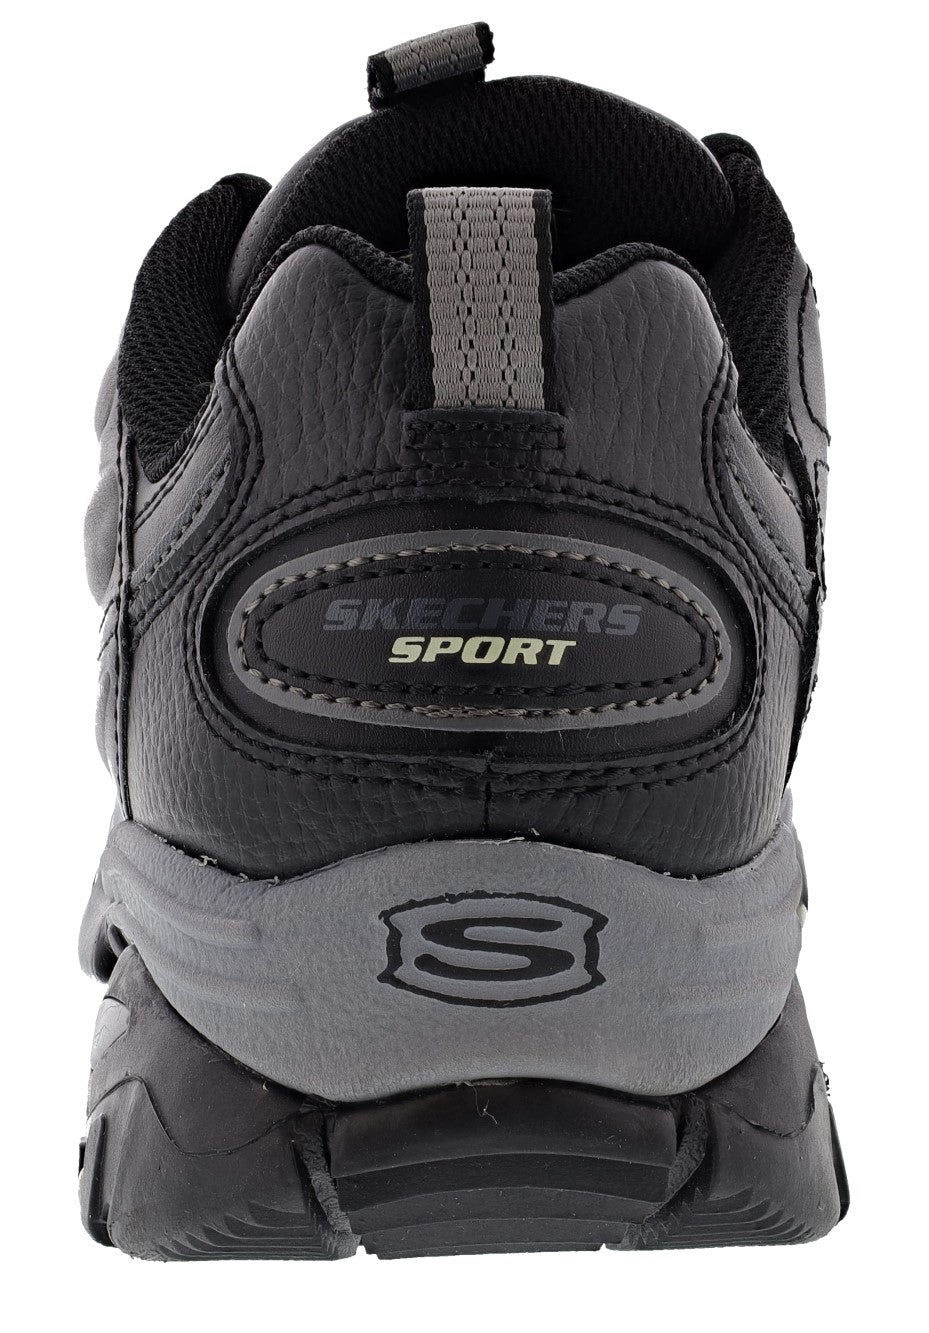 Skechers Energy After burn Wide Width Road Running Shoes Men's | adidas Seeley xt Men's Shoes | discoverysurveys